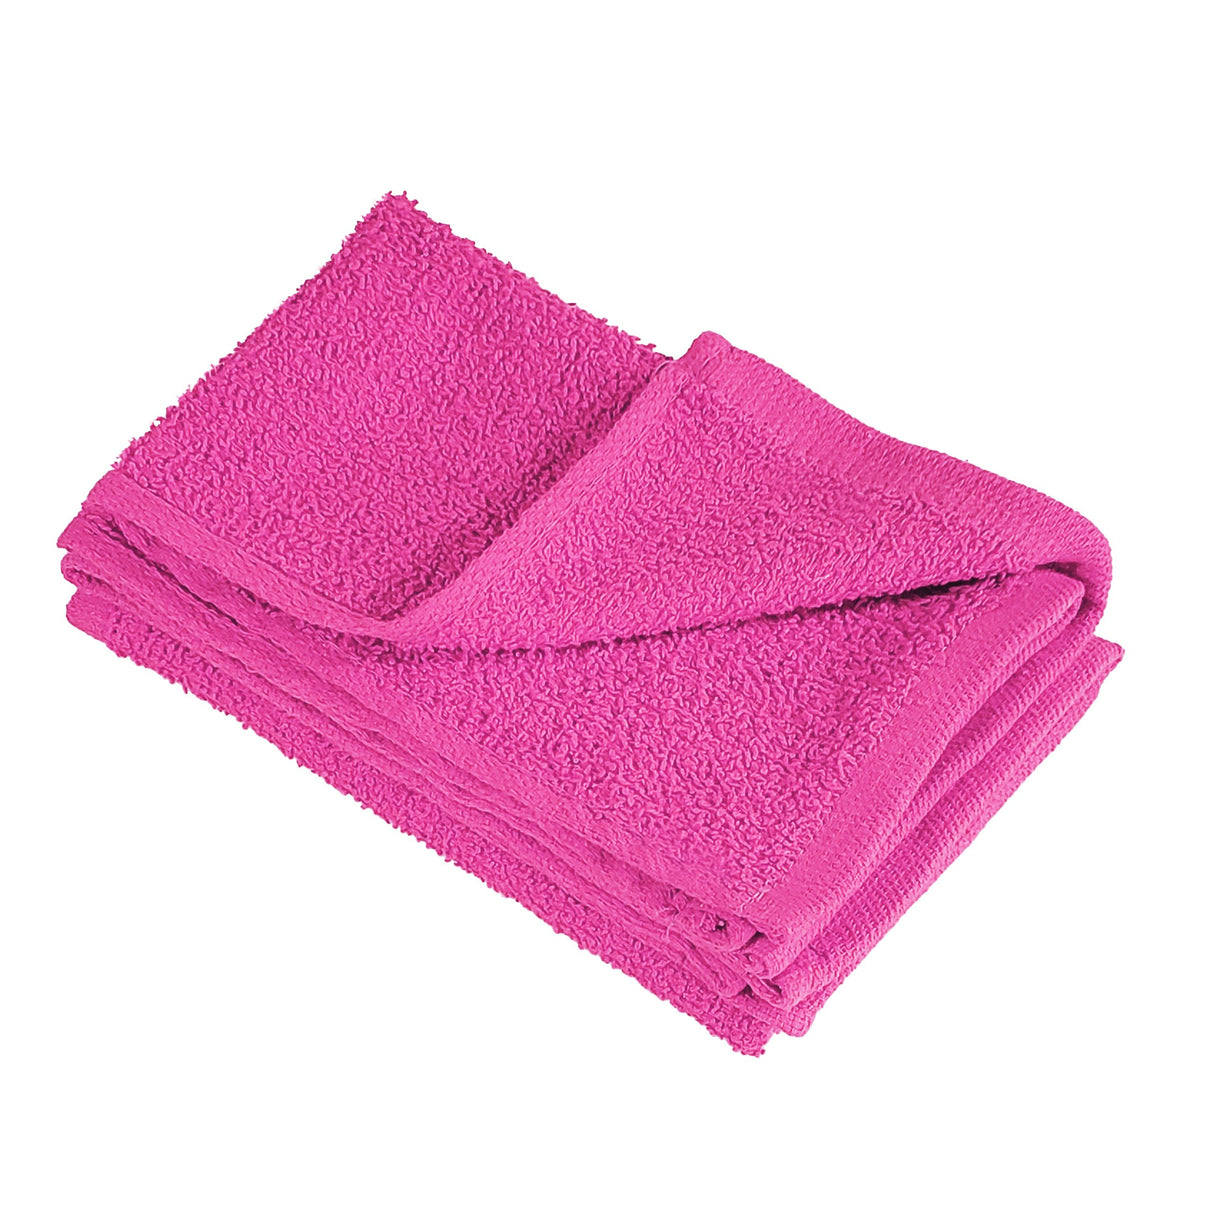 Cheap Hand Towel Hot Pink